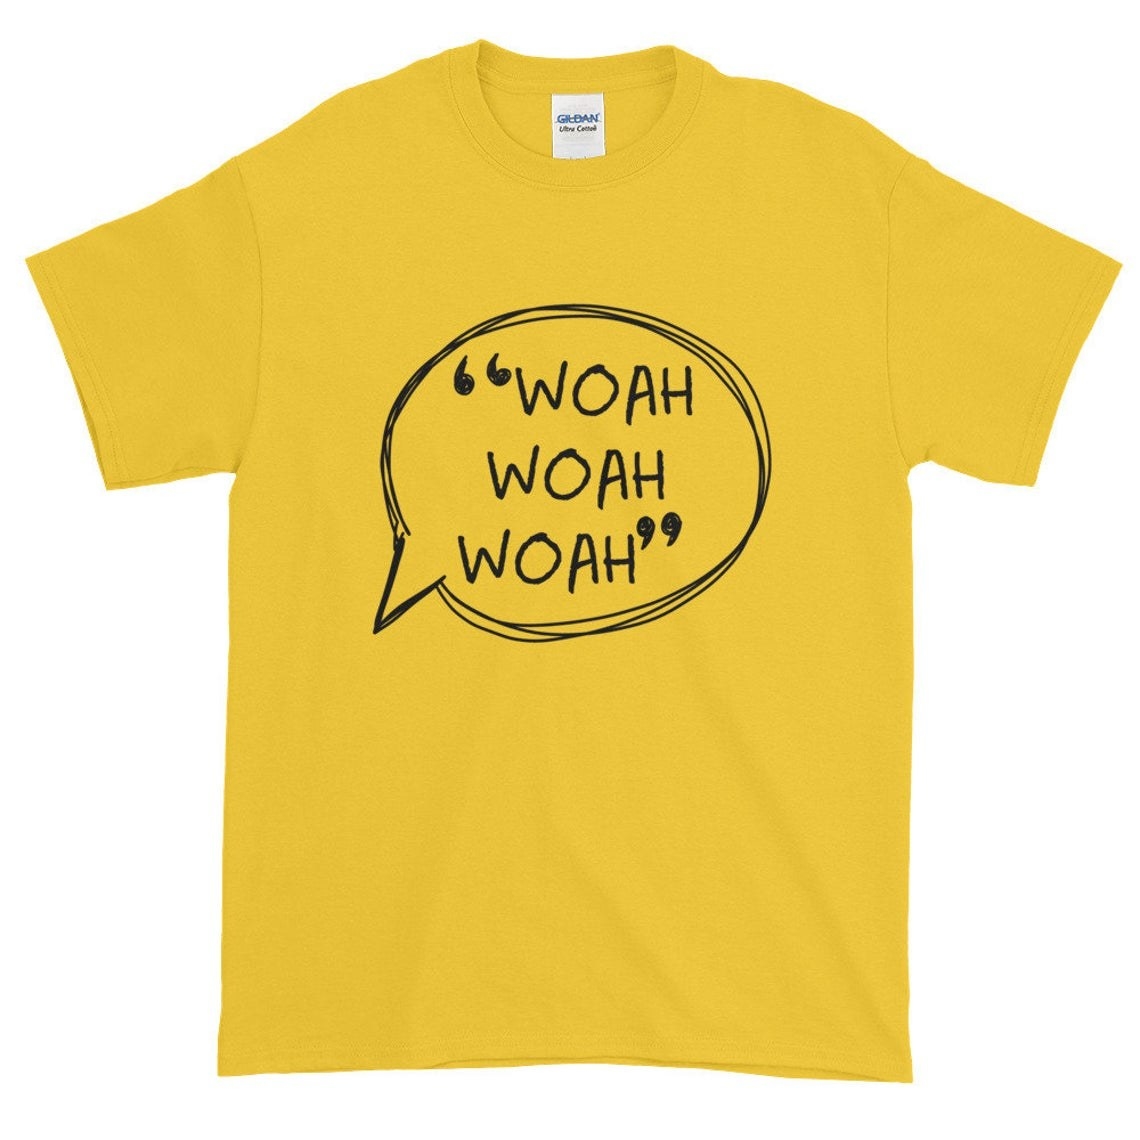 A graphic T-shirt that says woah woah woah on it